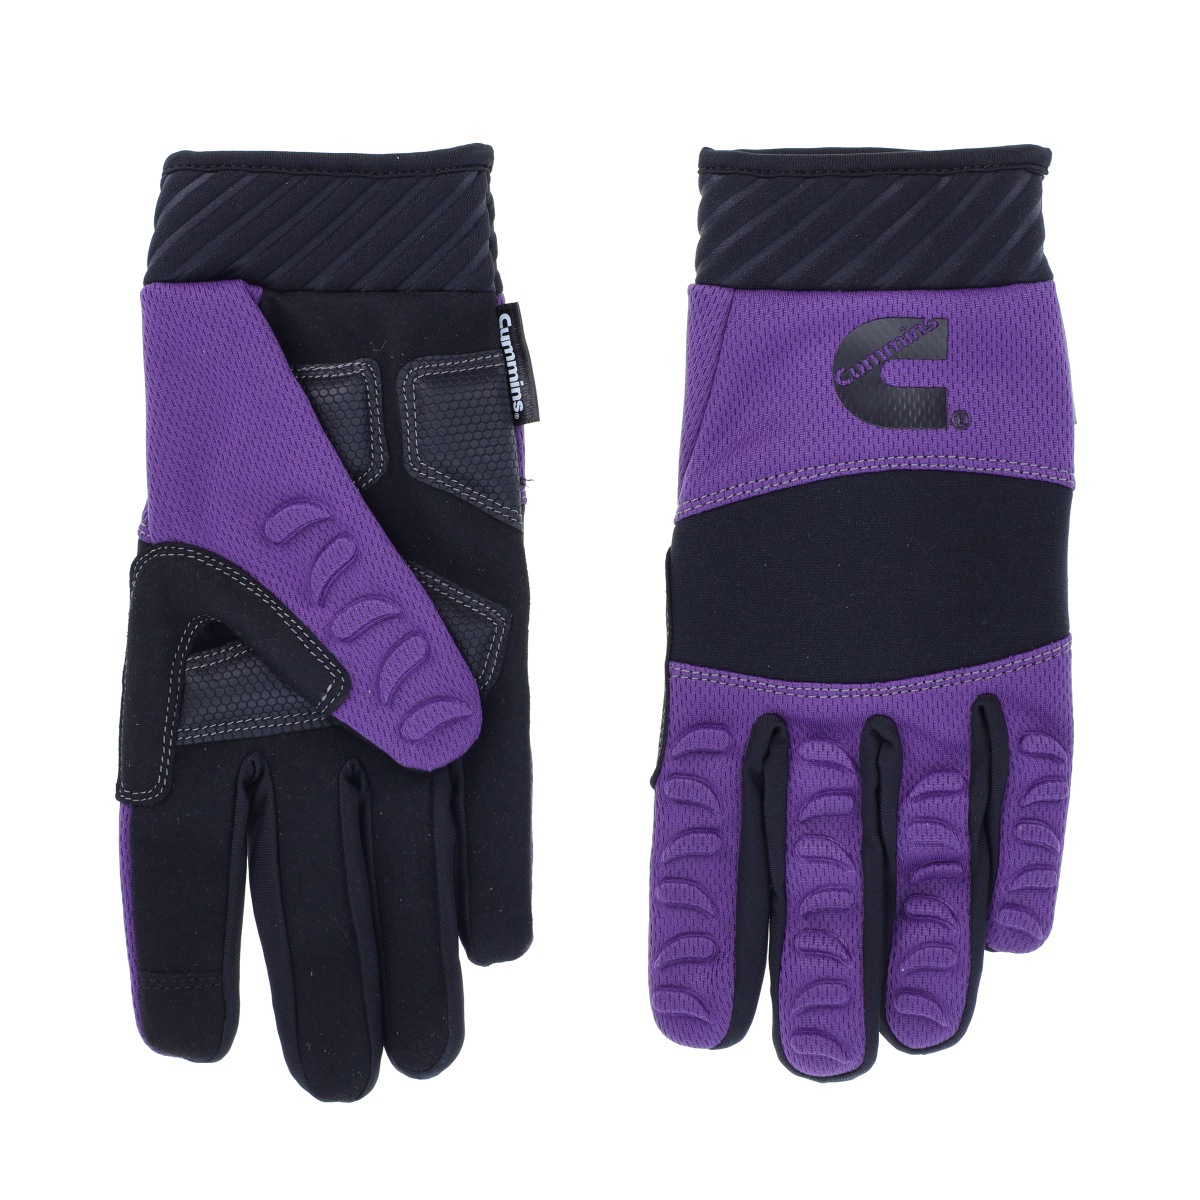 Cummins Womens Mechanic Glove CMN35113 - Purple and Black Synthetic Leather Anti-Vibration Anti-Abrasion Work Gloves All Season 